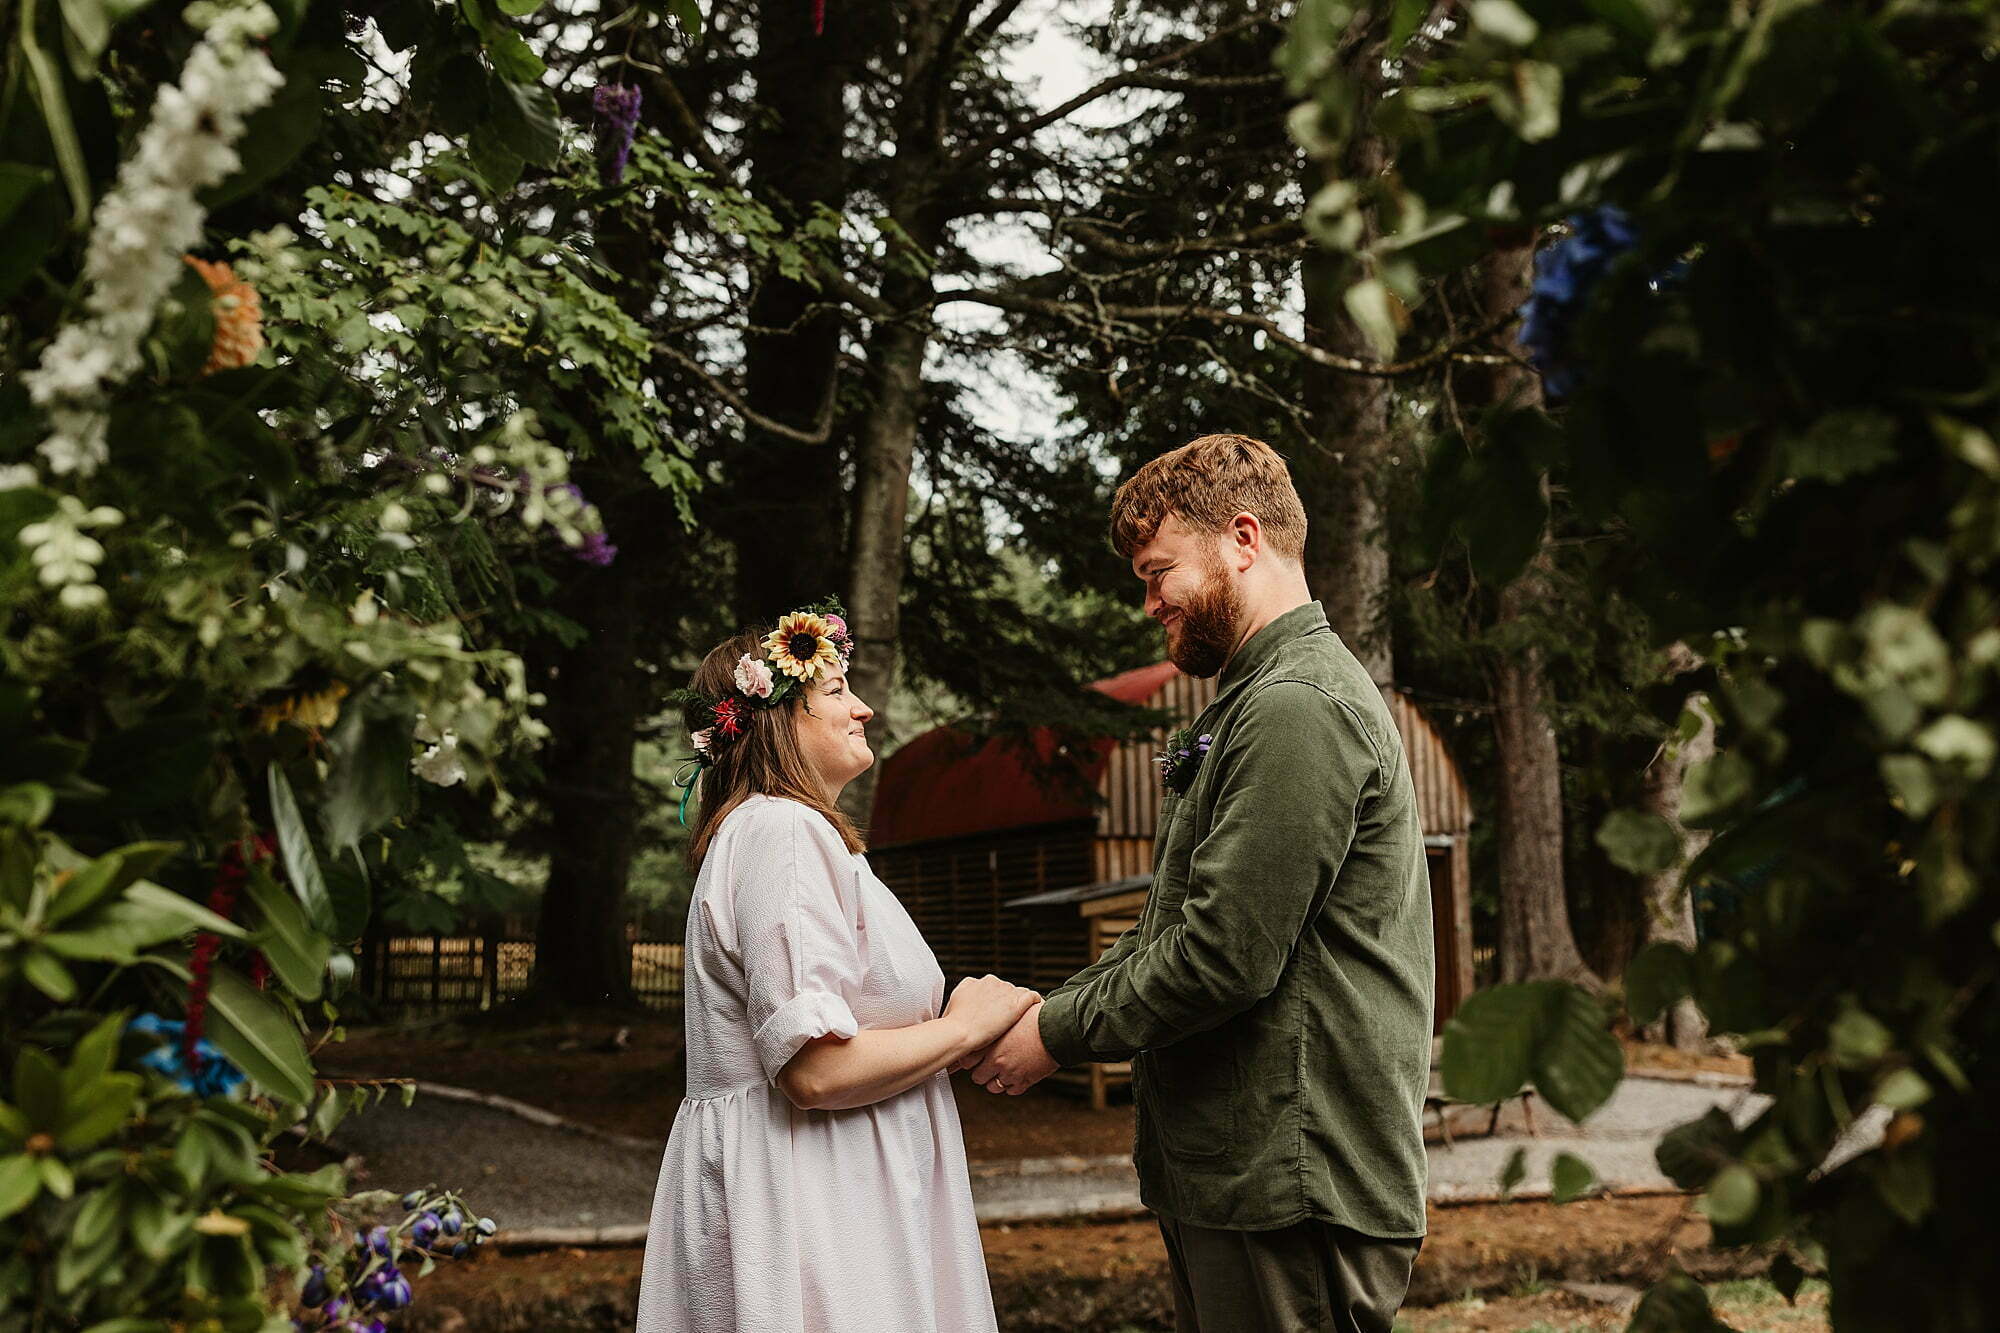 glen dye outdoor ceremony humanist wedding personal vows hays flowers floral crown